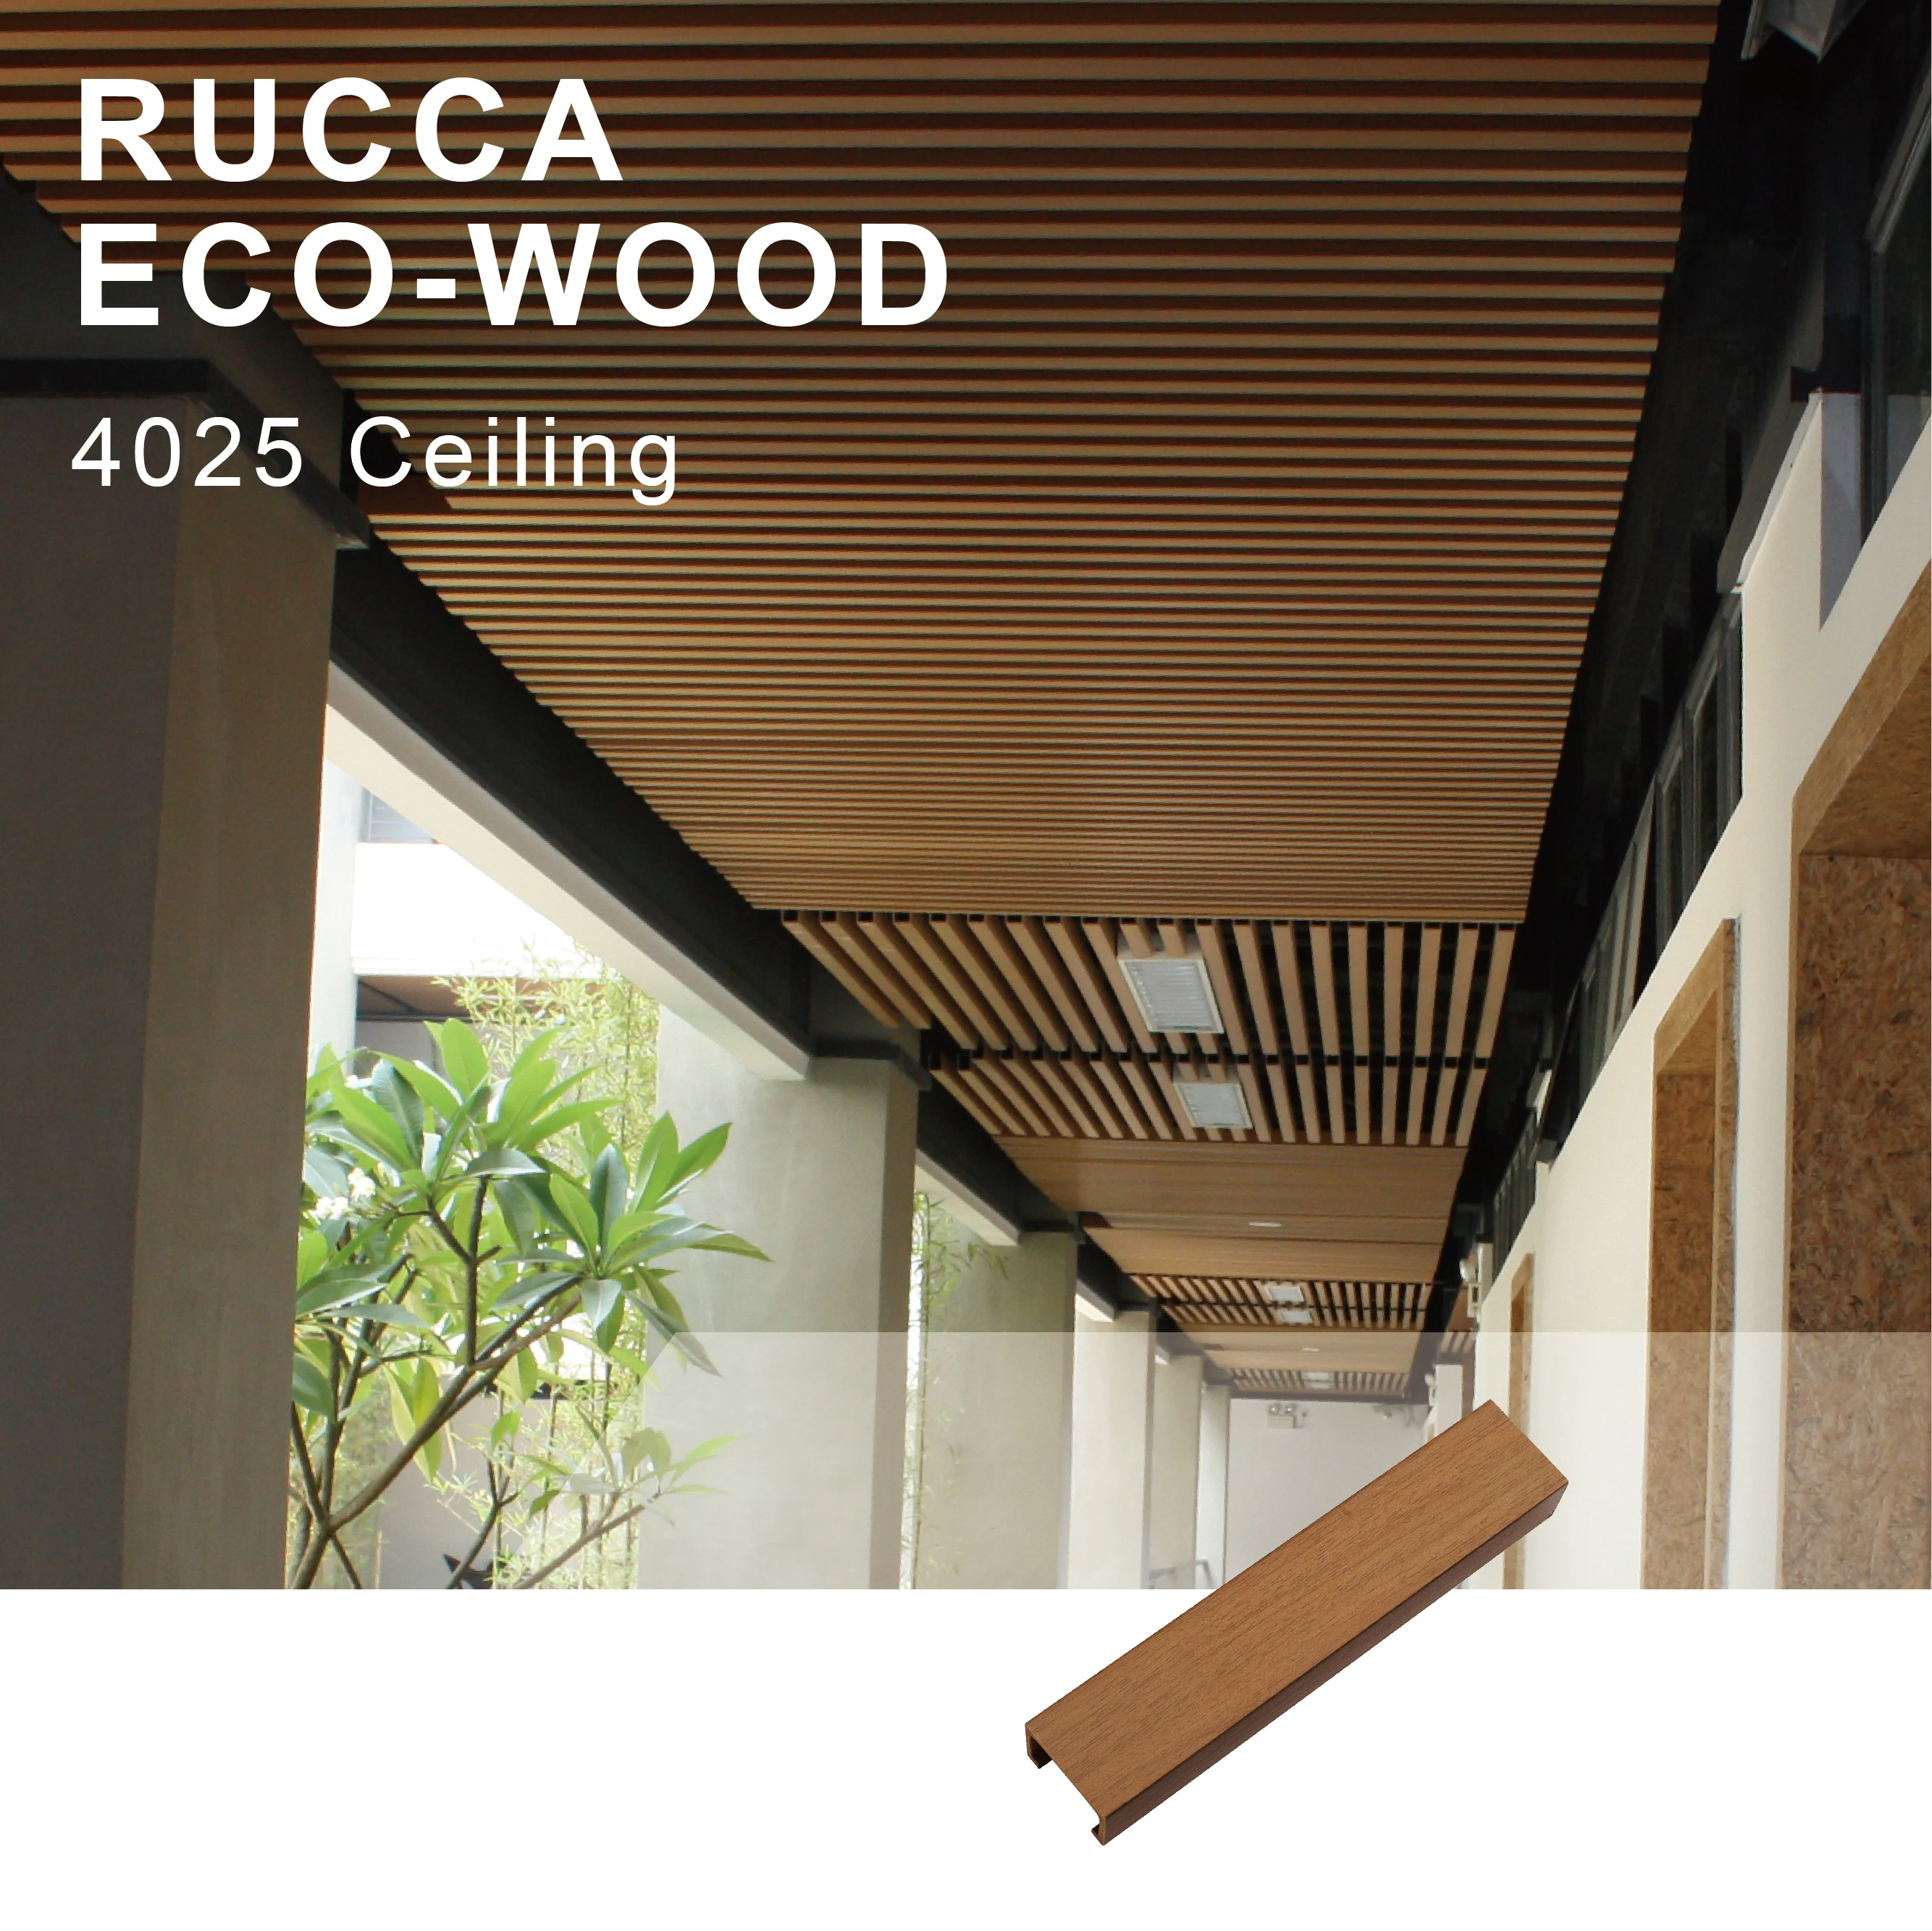 Rucca Wood Composite False Ceiling Tile Architectural Design Hall Restaurant Home Interior Decoration 40 25mm Buy Ceiling Tile False Ceiling Ceiling